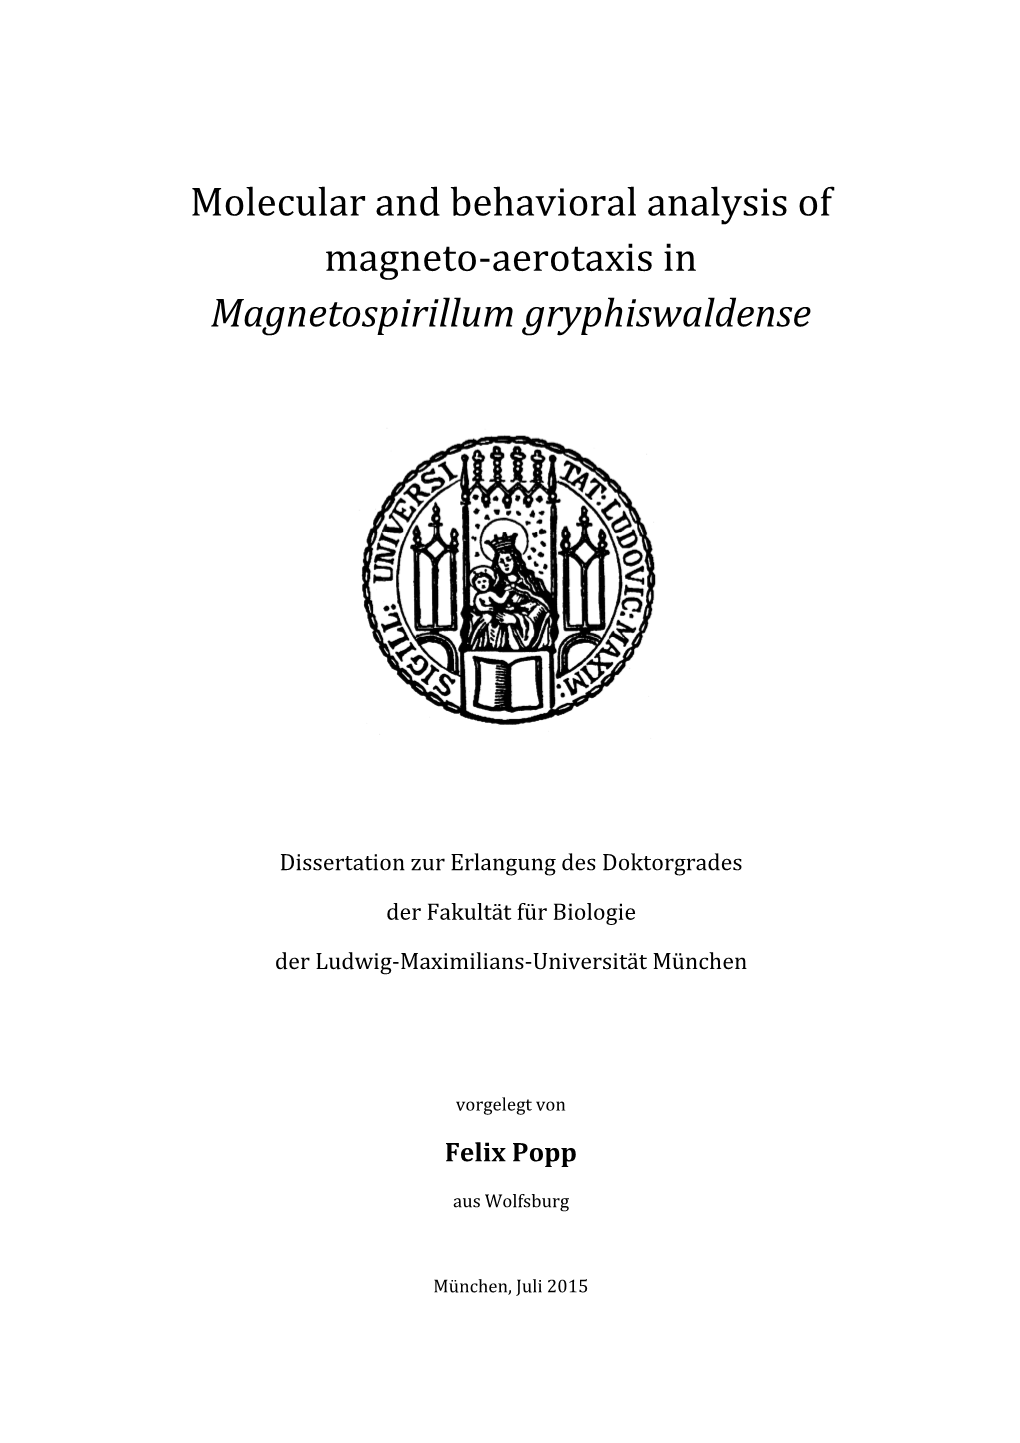 Molecular and Behavioral Analysis of Magneto-Aerotaxis in Magnetospirillum Gryphiswaldense